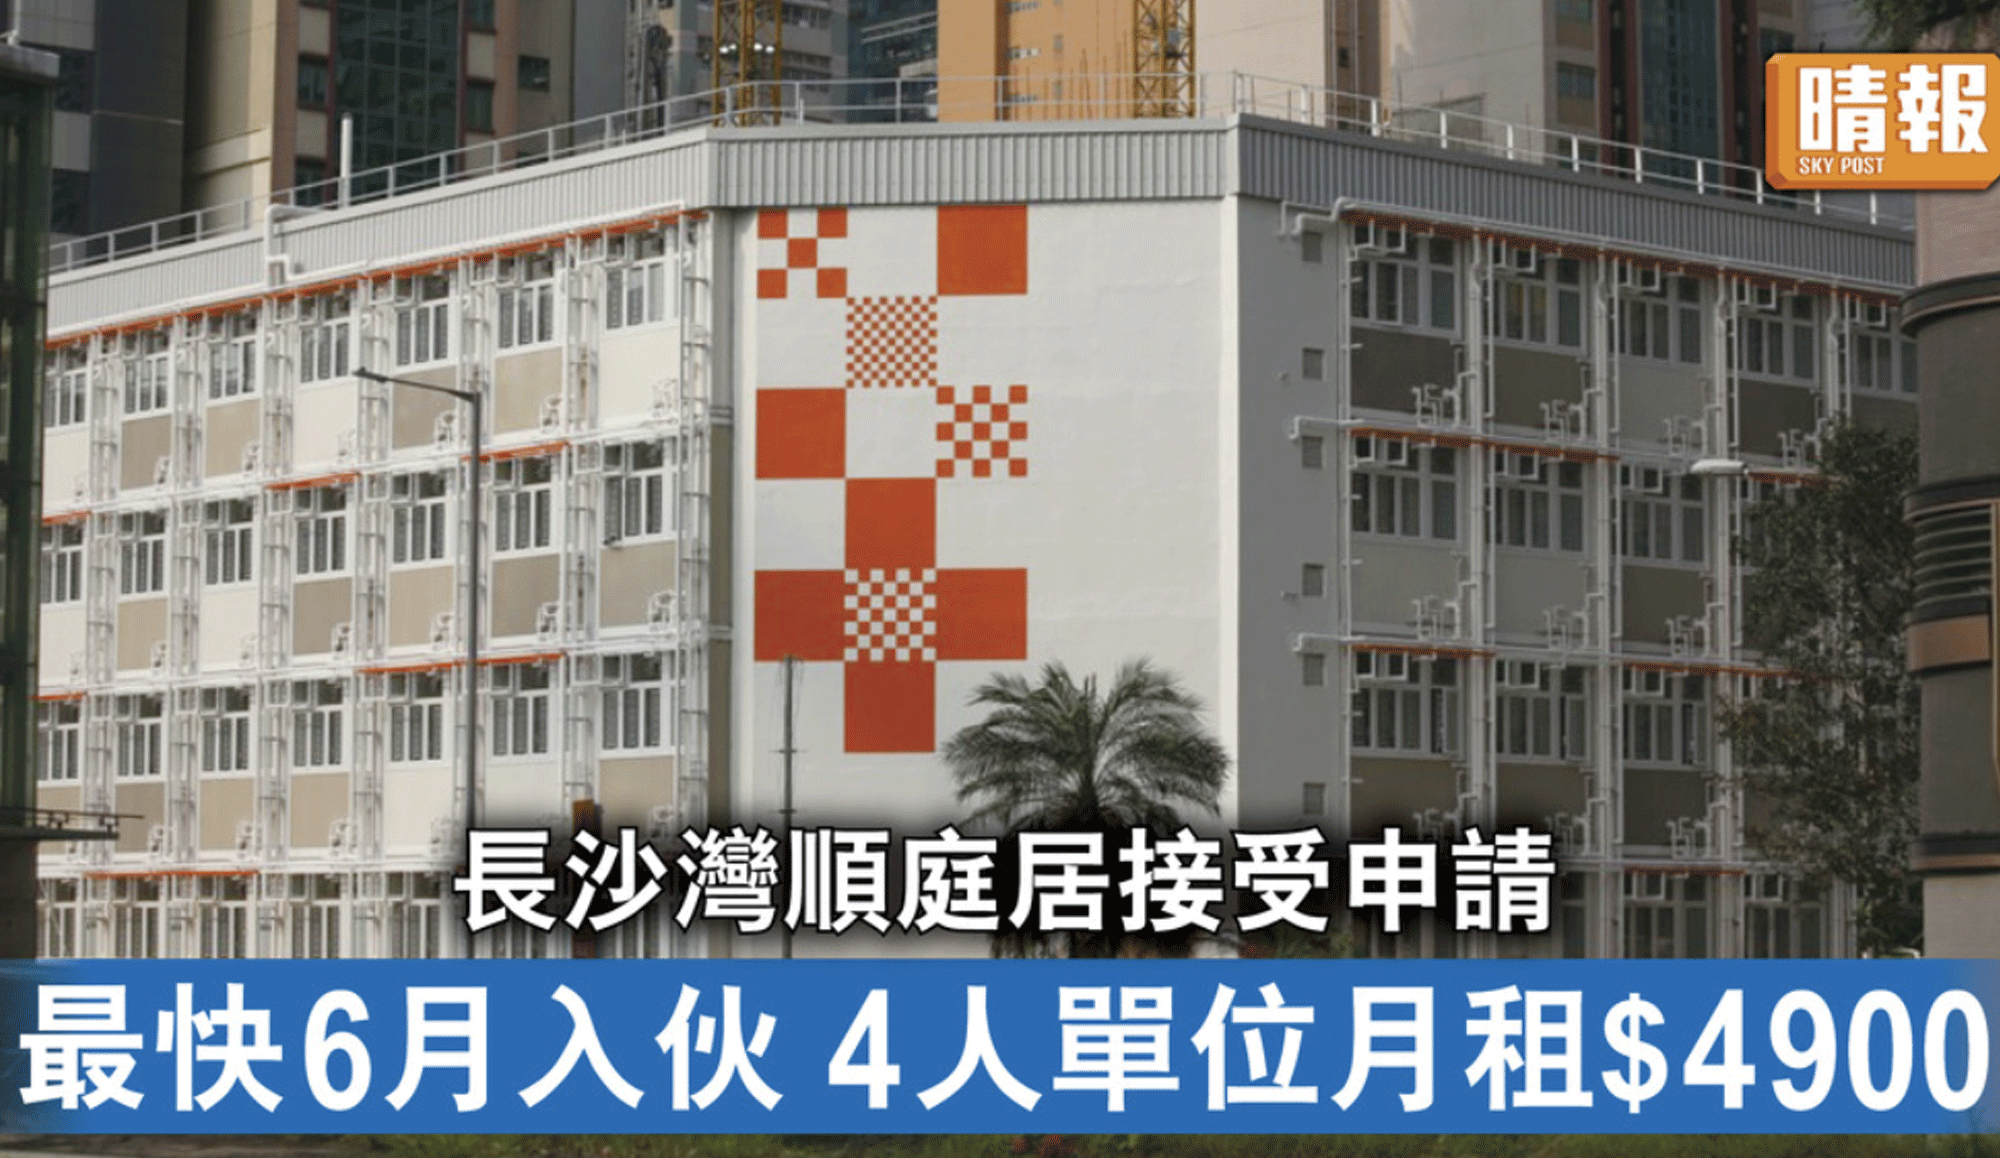 Cover Image - Skypost - Social Housing Project - Cheung Sha Wan “Shun Ting Terraced Home”